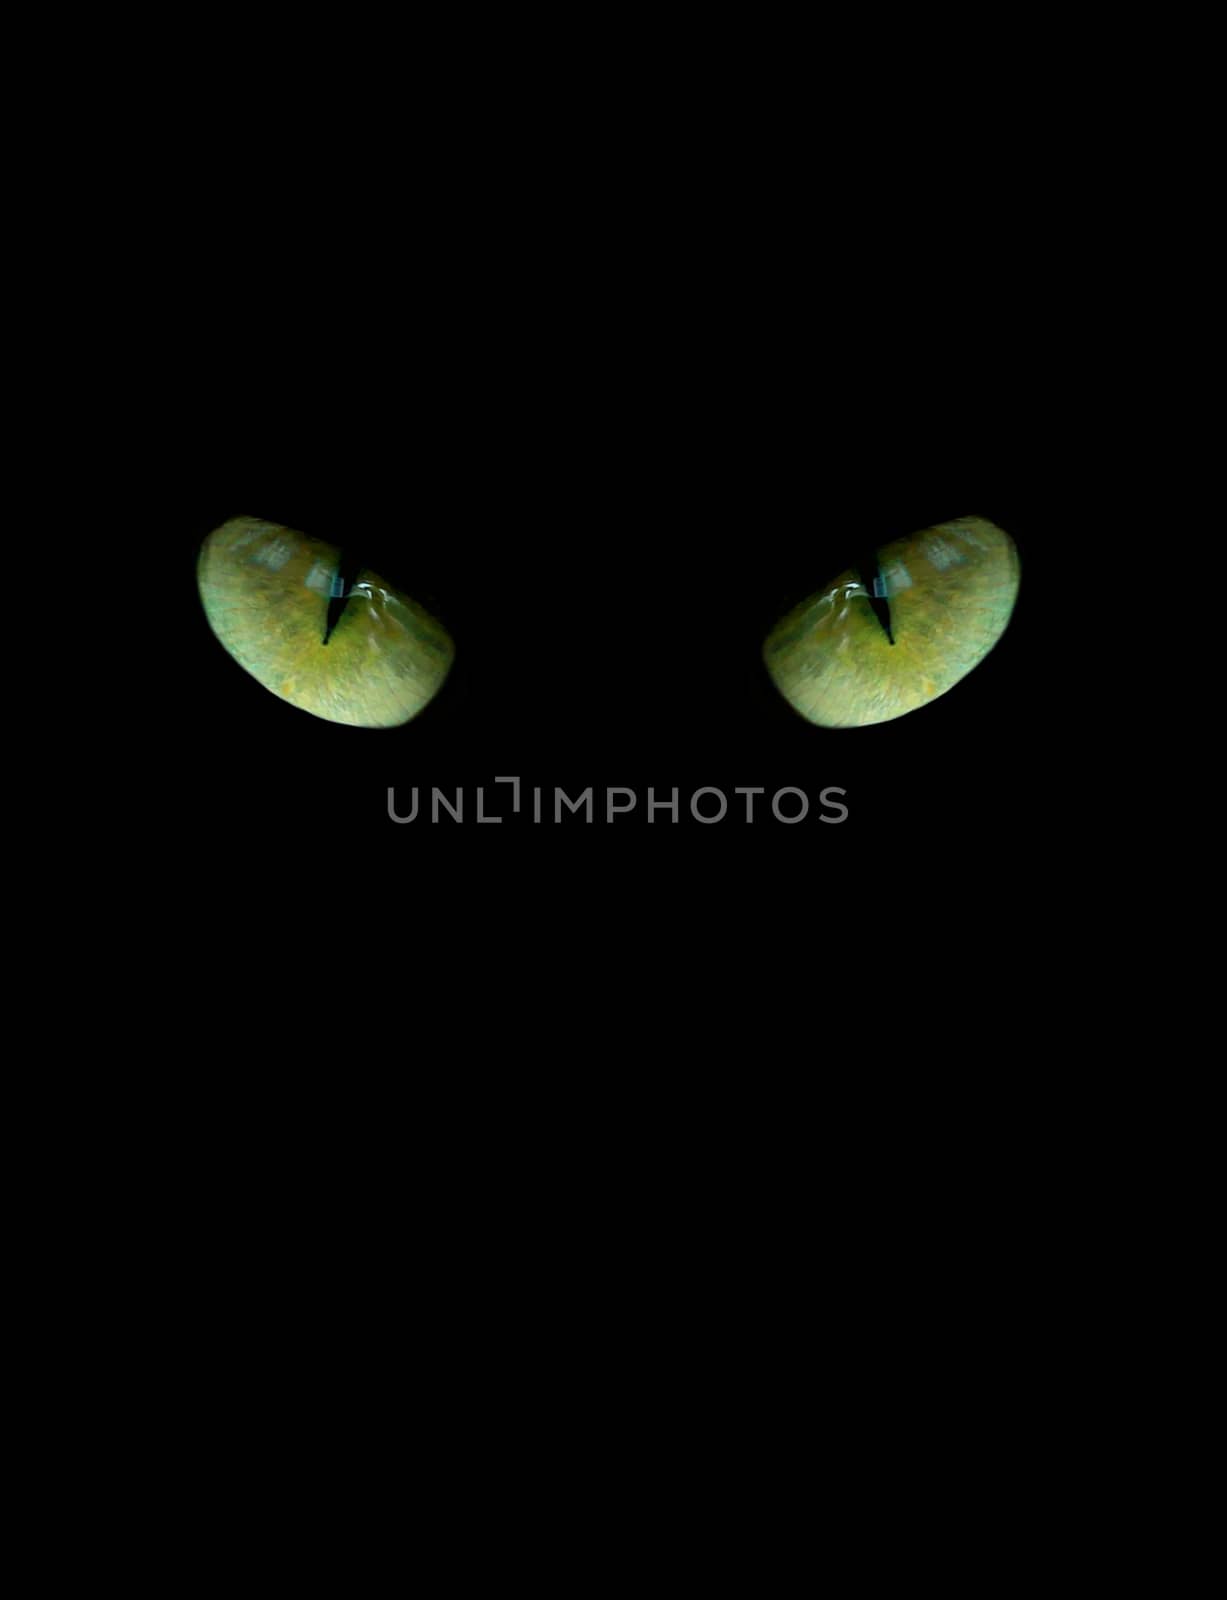 eyes of cat isolated on the black background